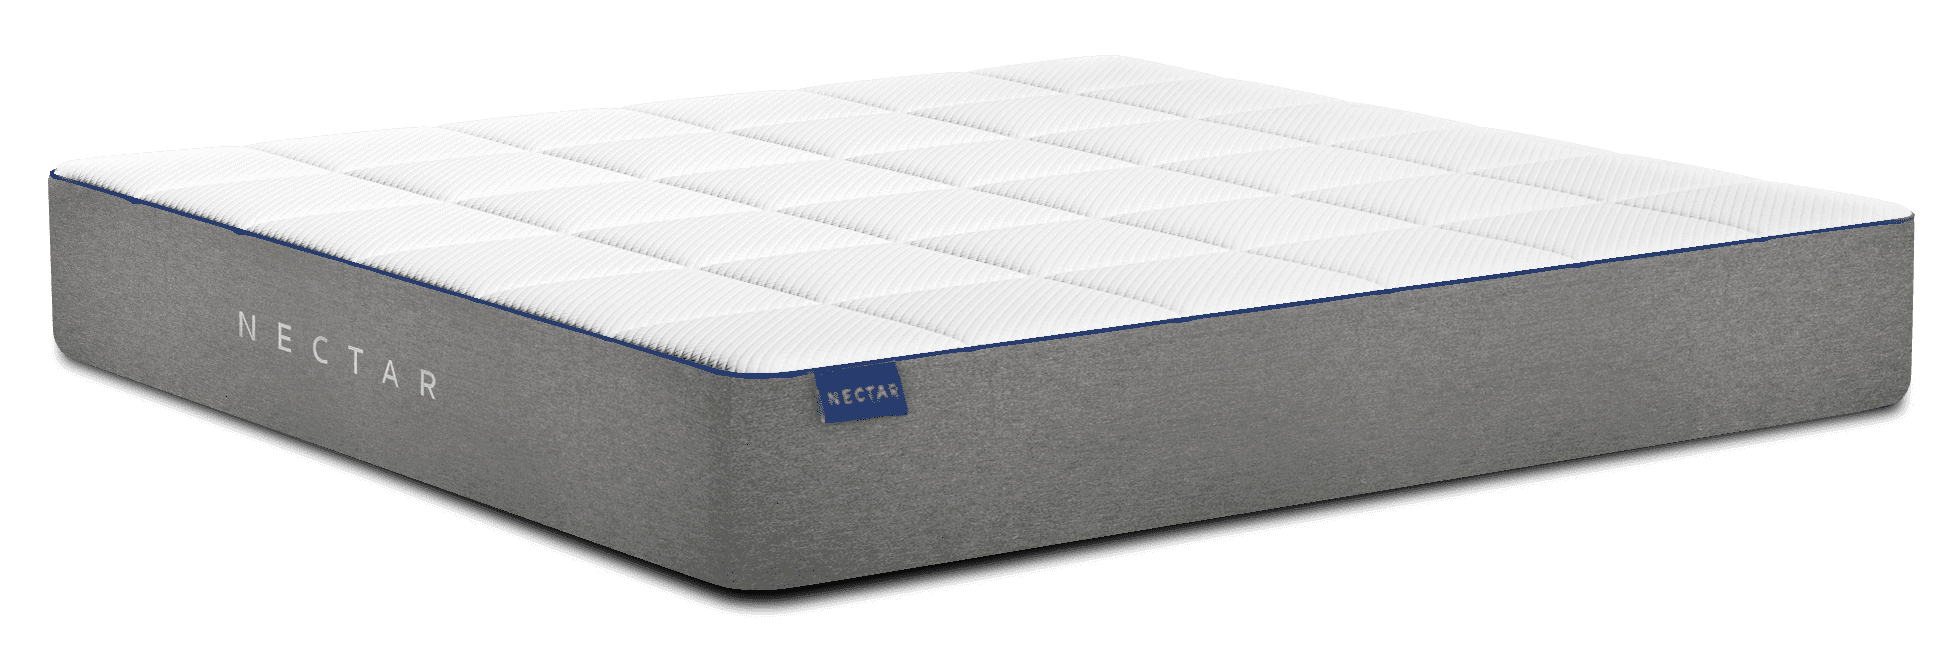 nectar memory foam mattress material